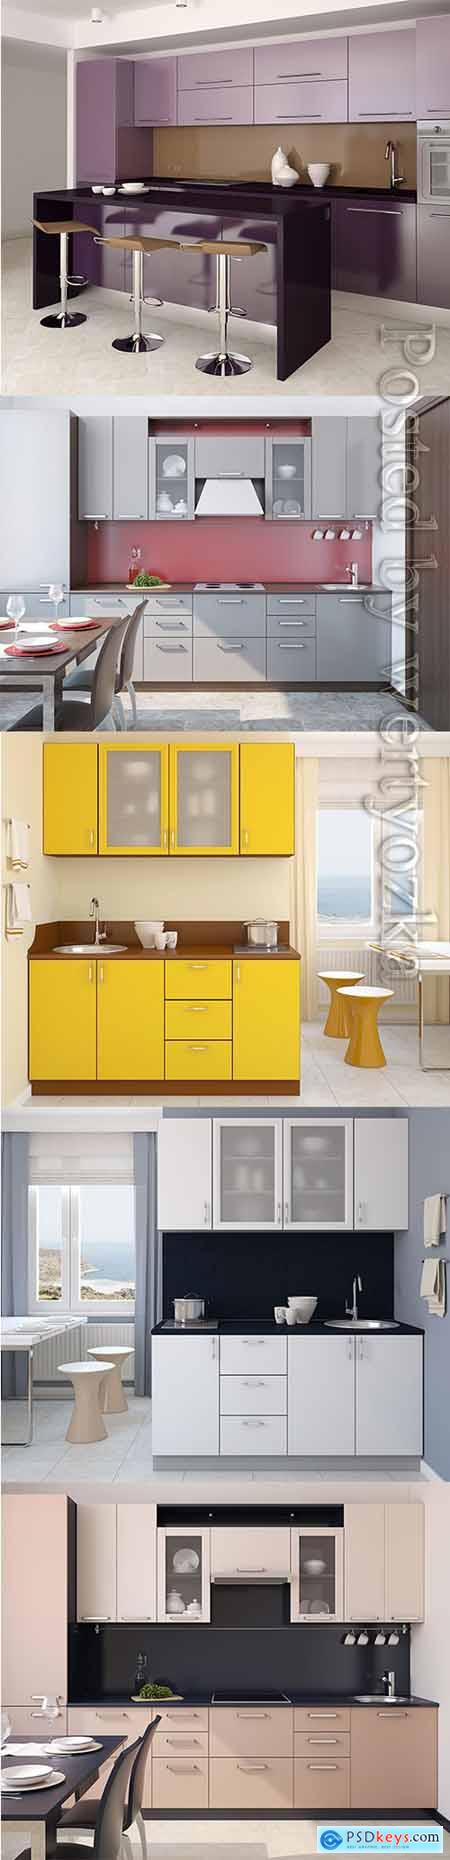 Stylish kitchen interior stock photo